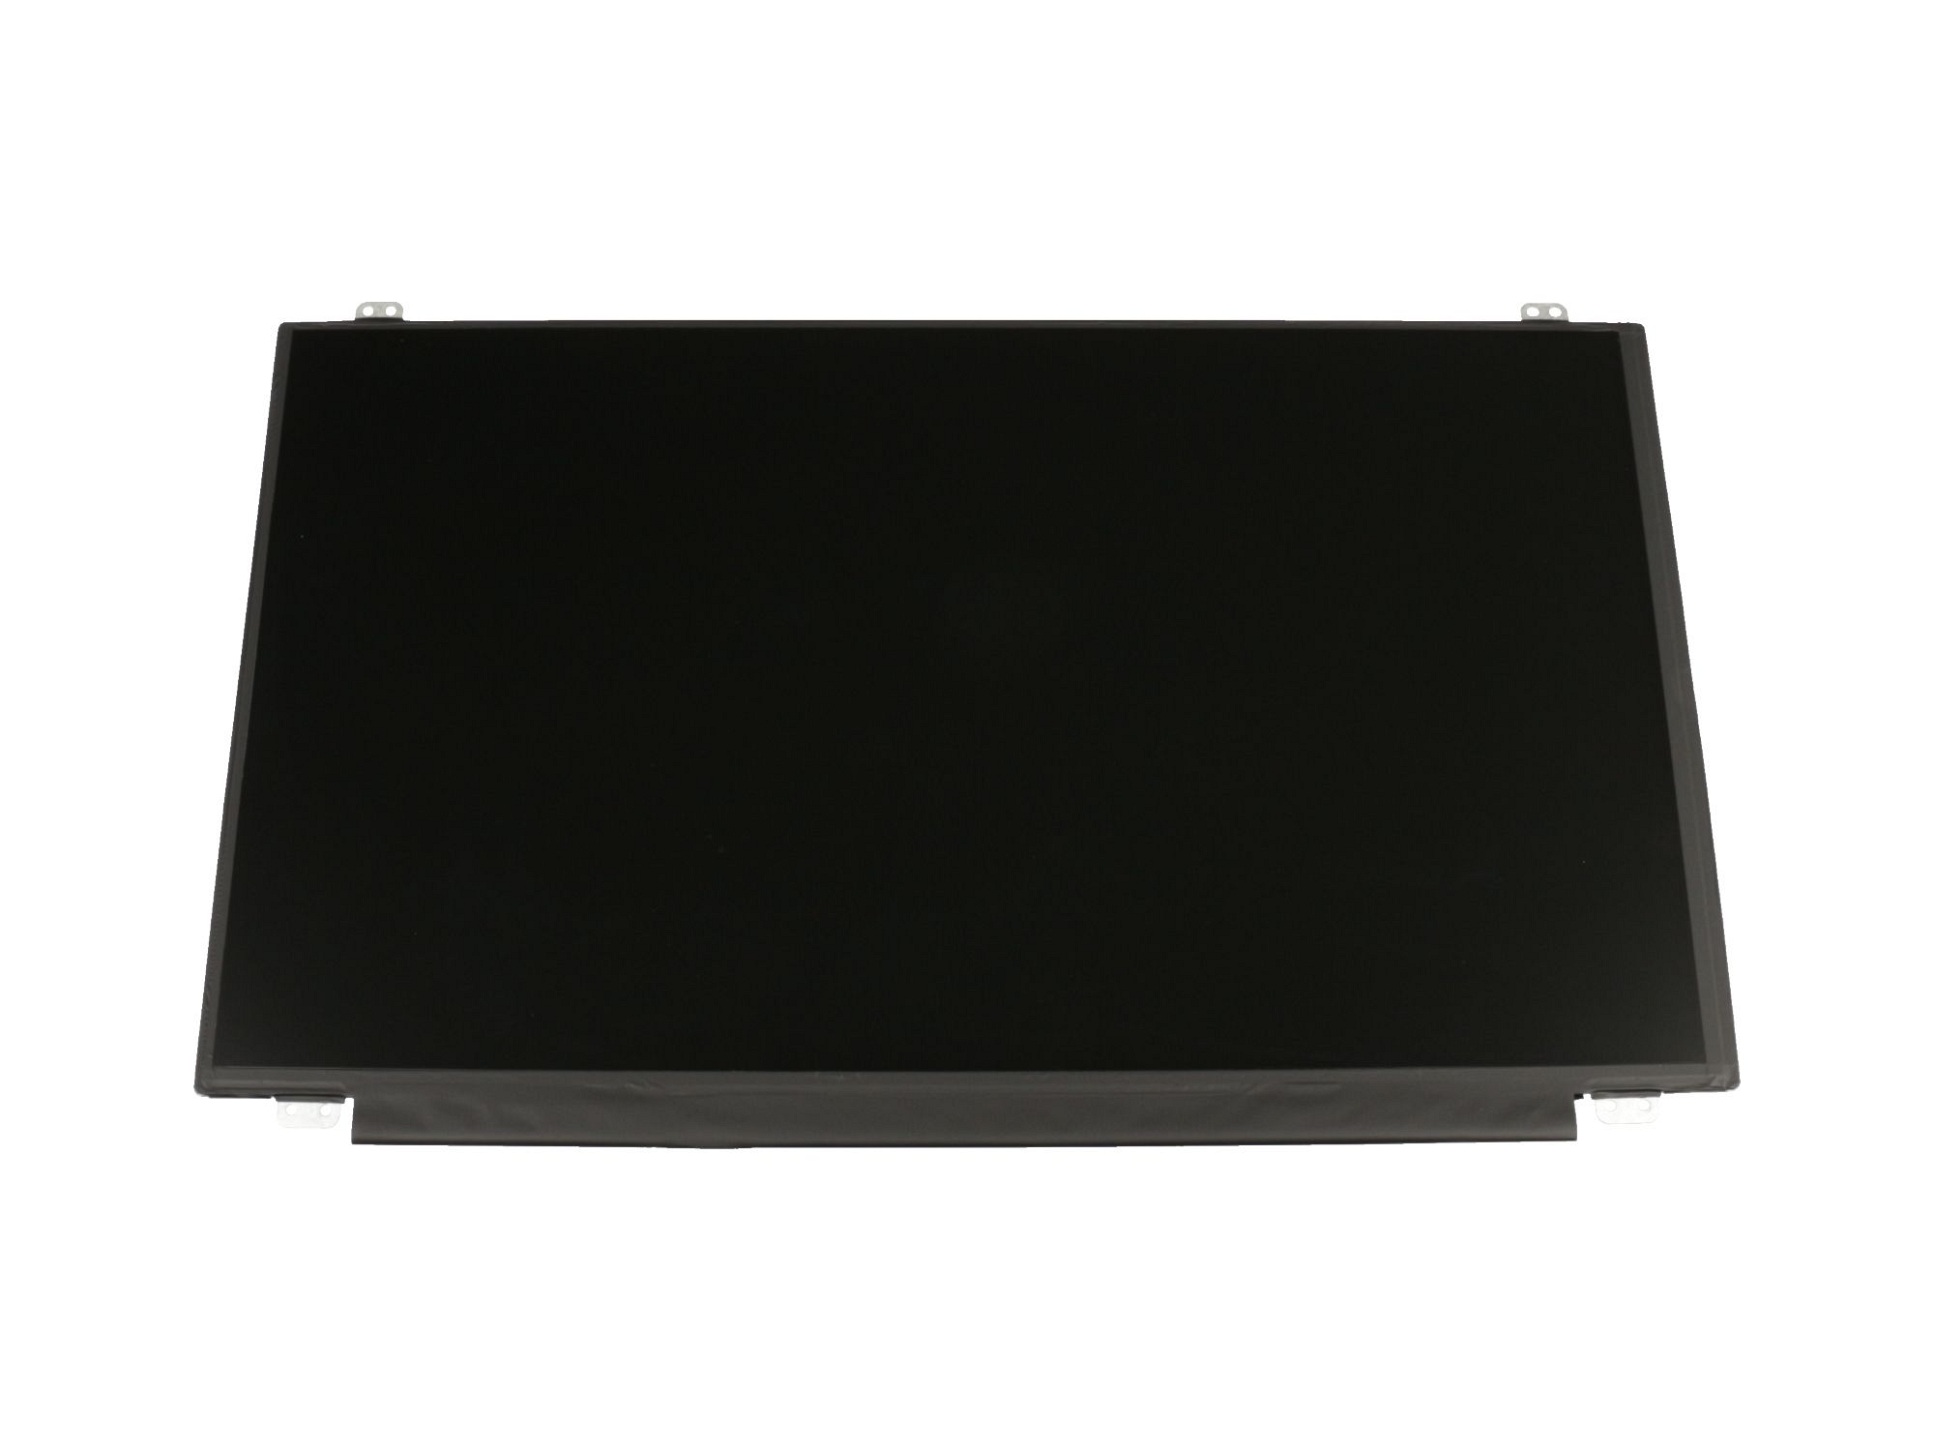 LG LP156WHB-TPH1 Display (1366x768) matt slimline